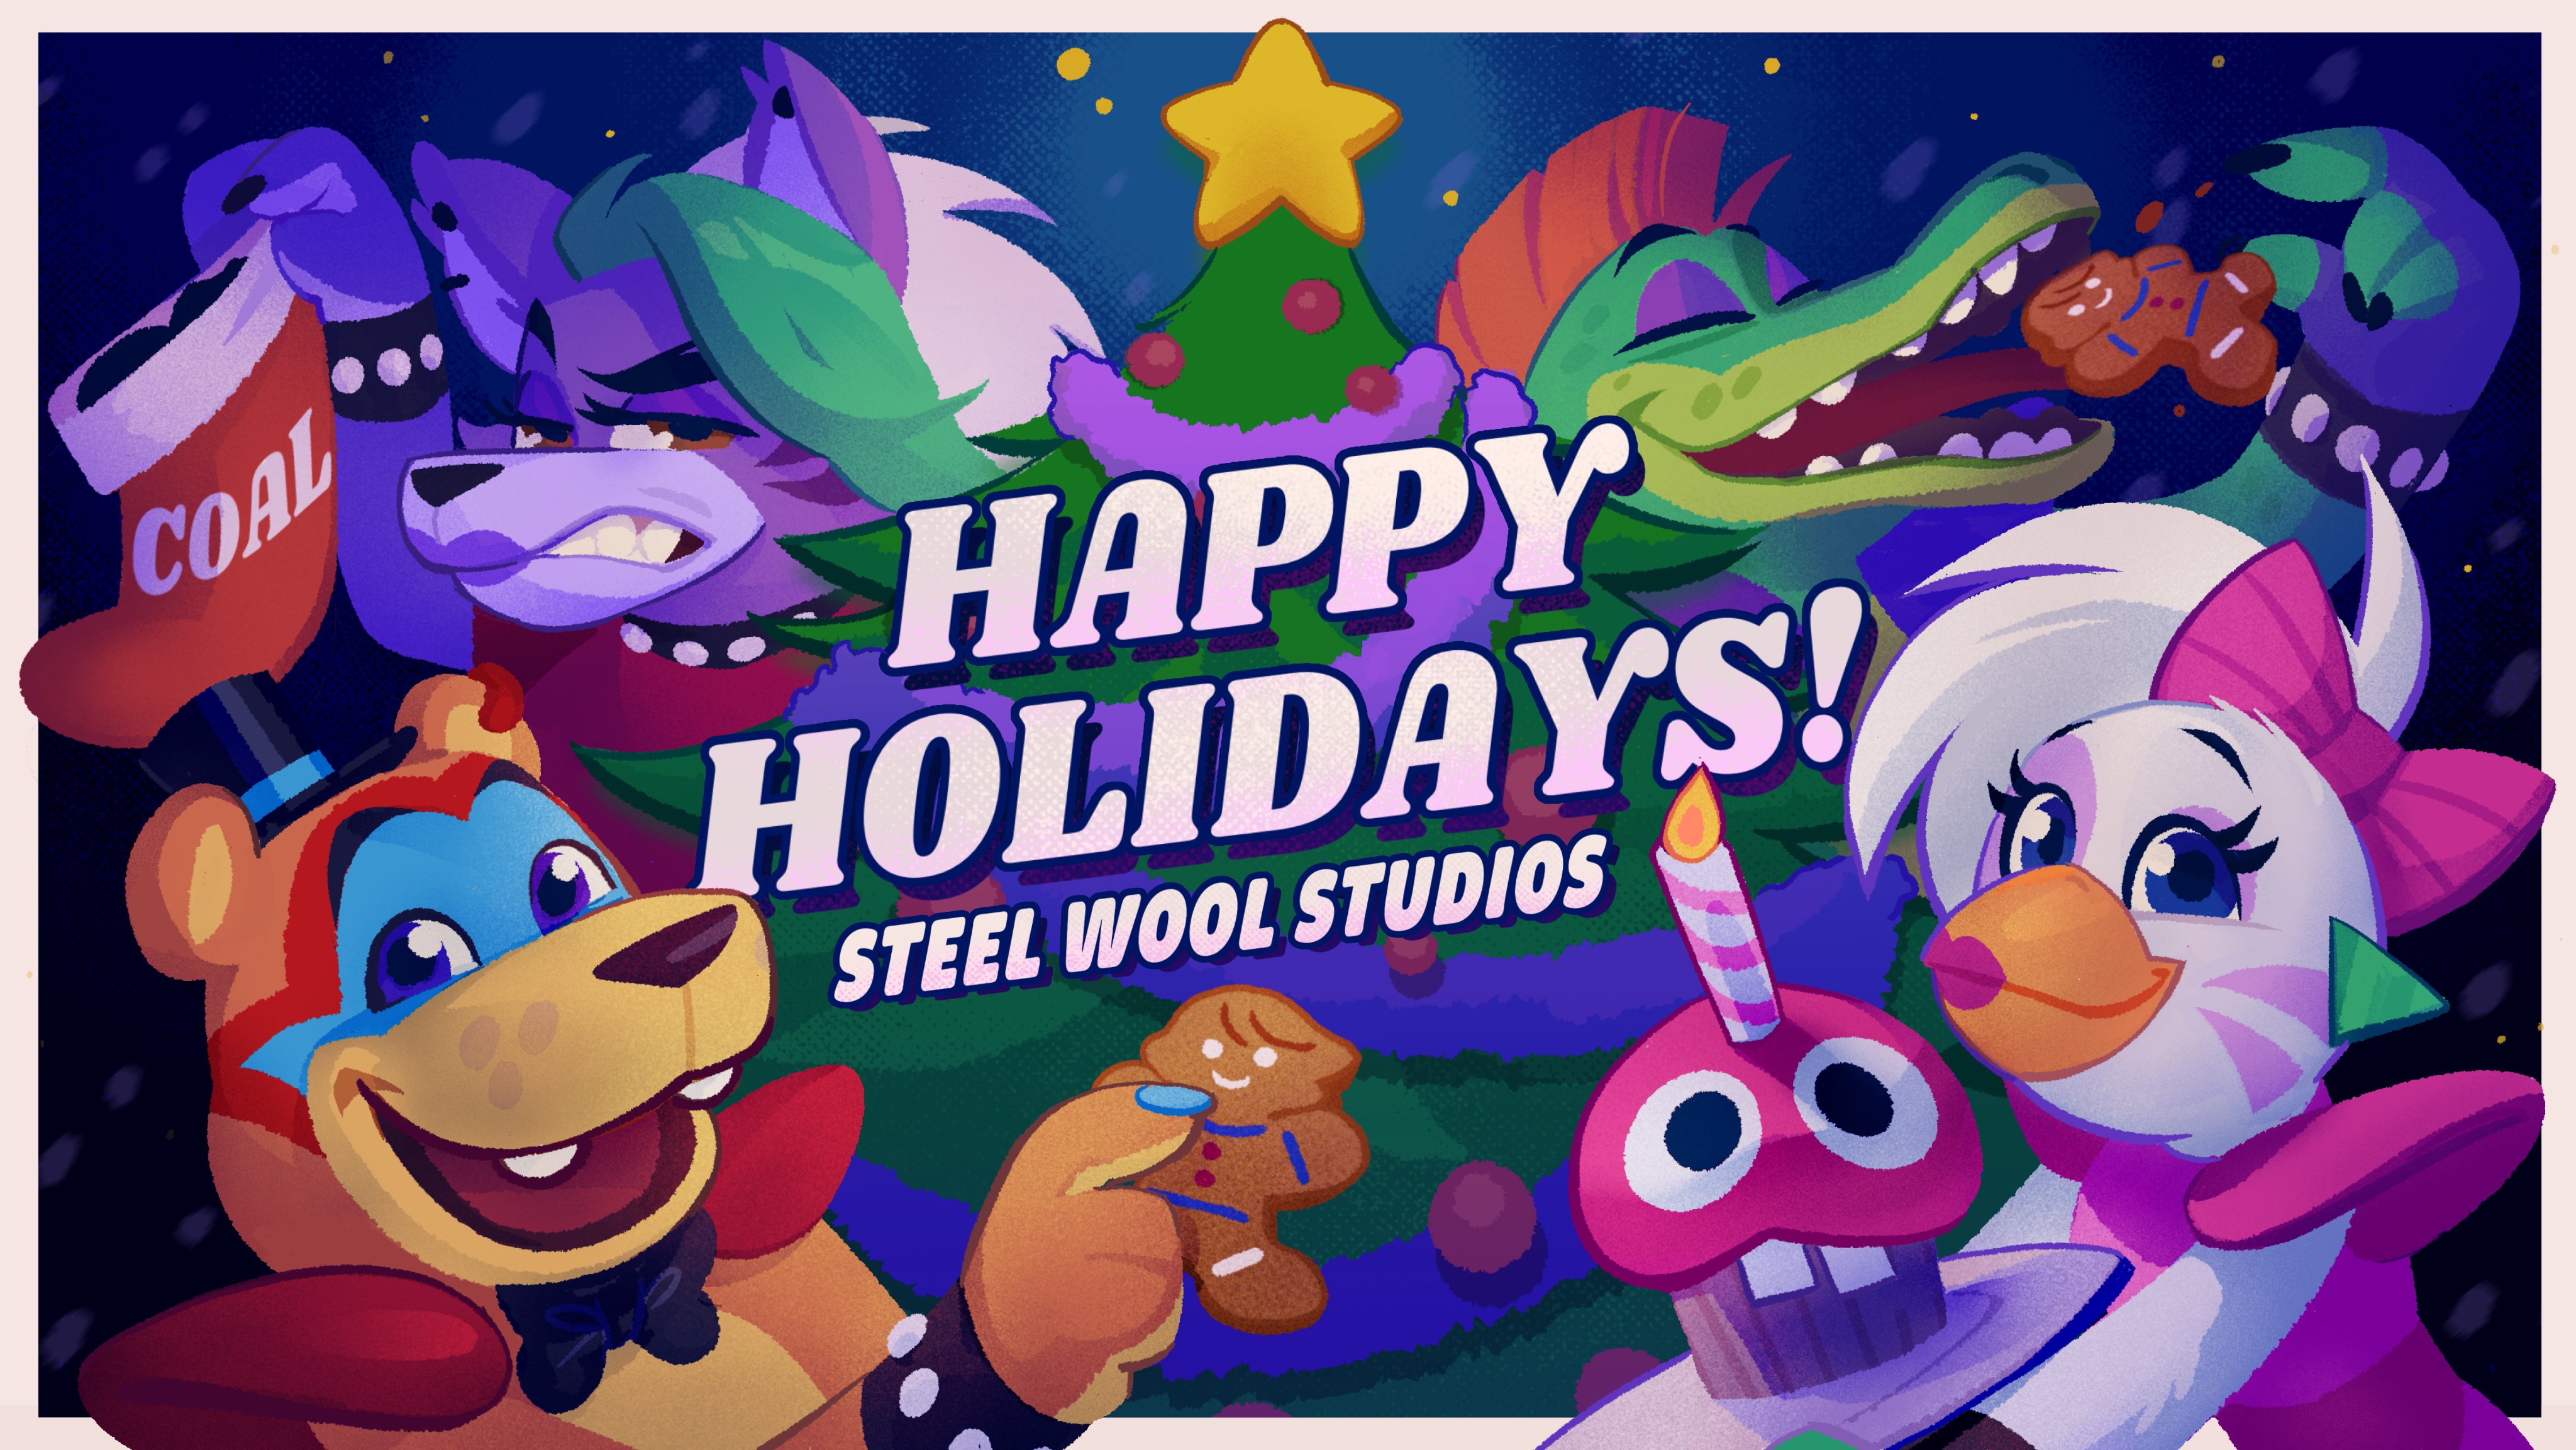 Steel Wool Studios (@SteelWoolStudio) / X